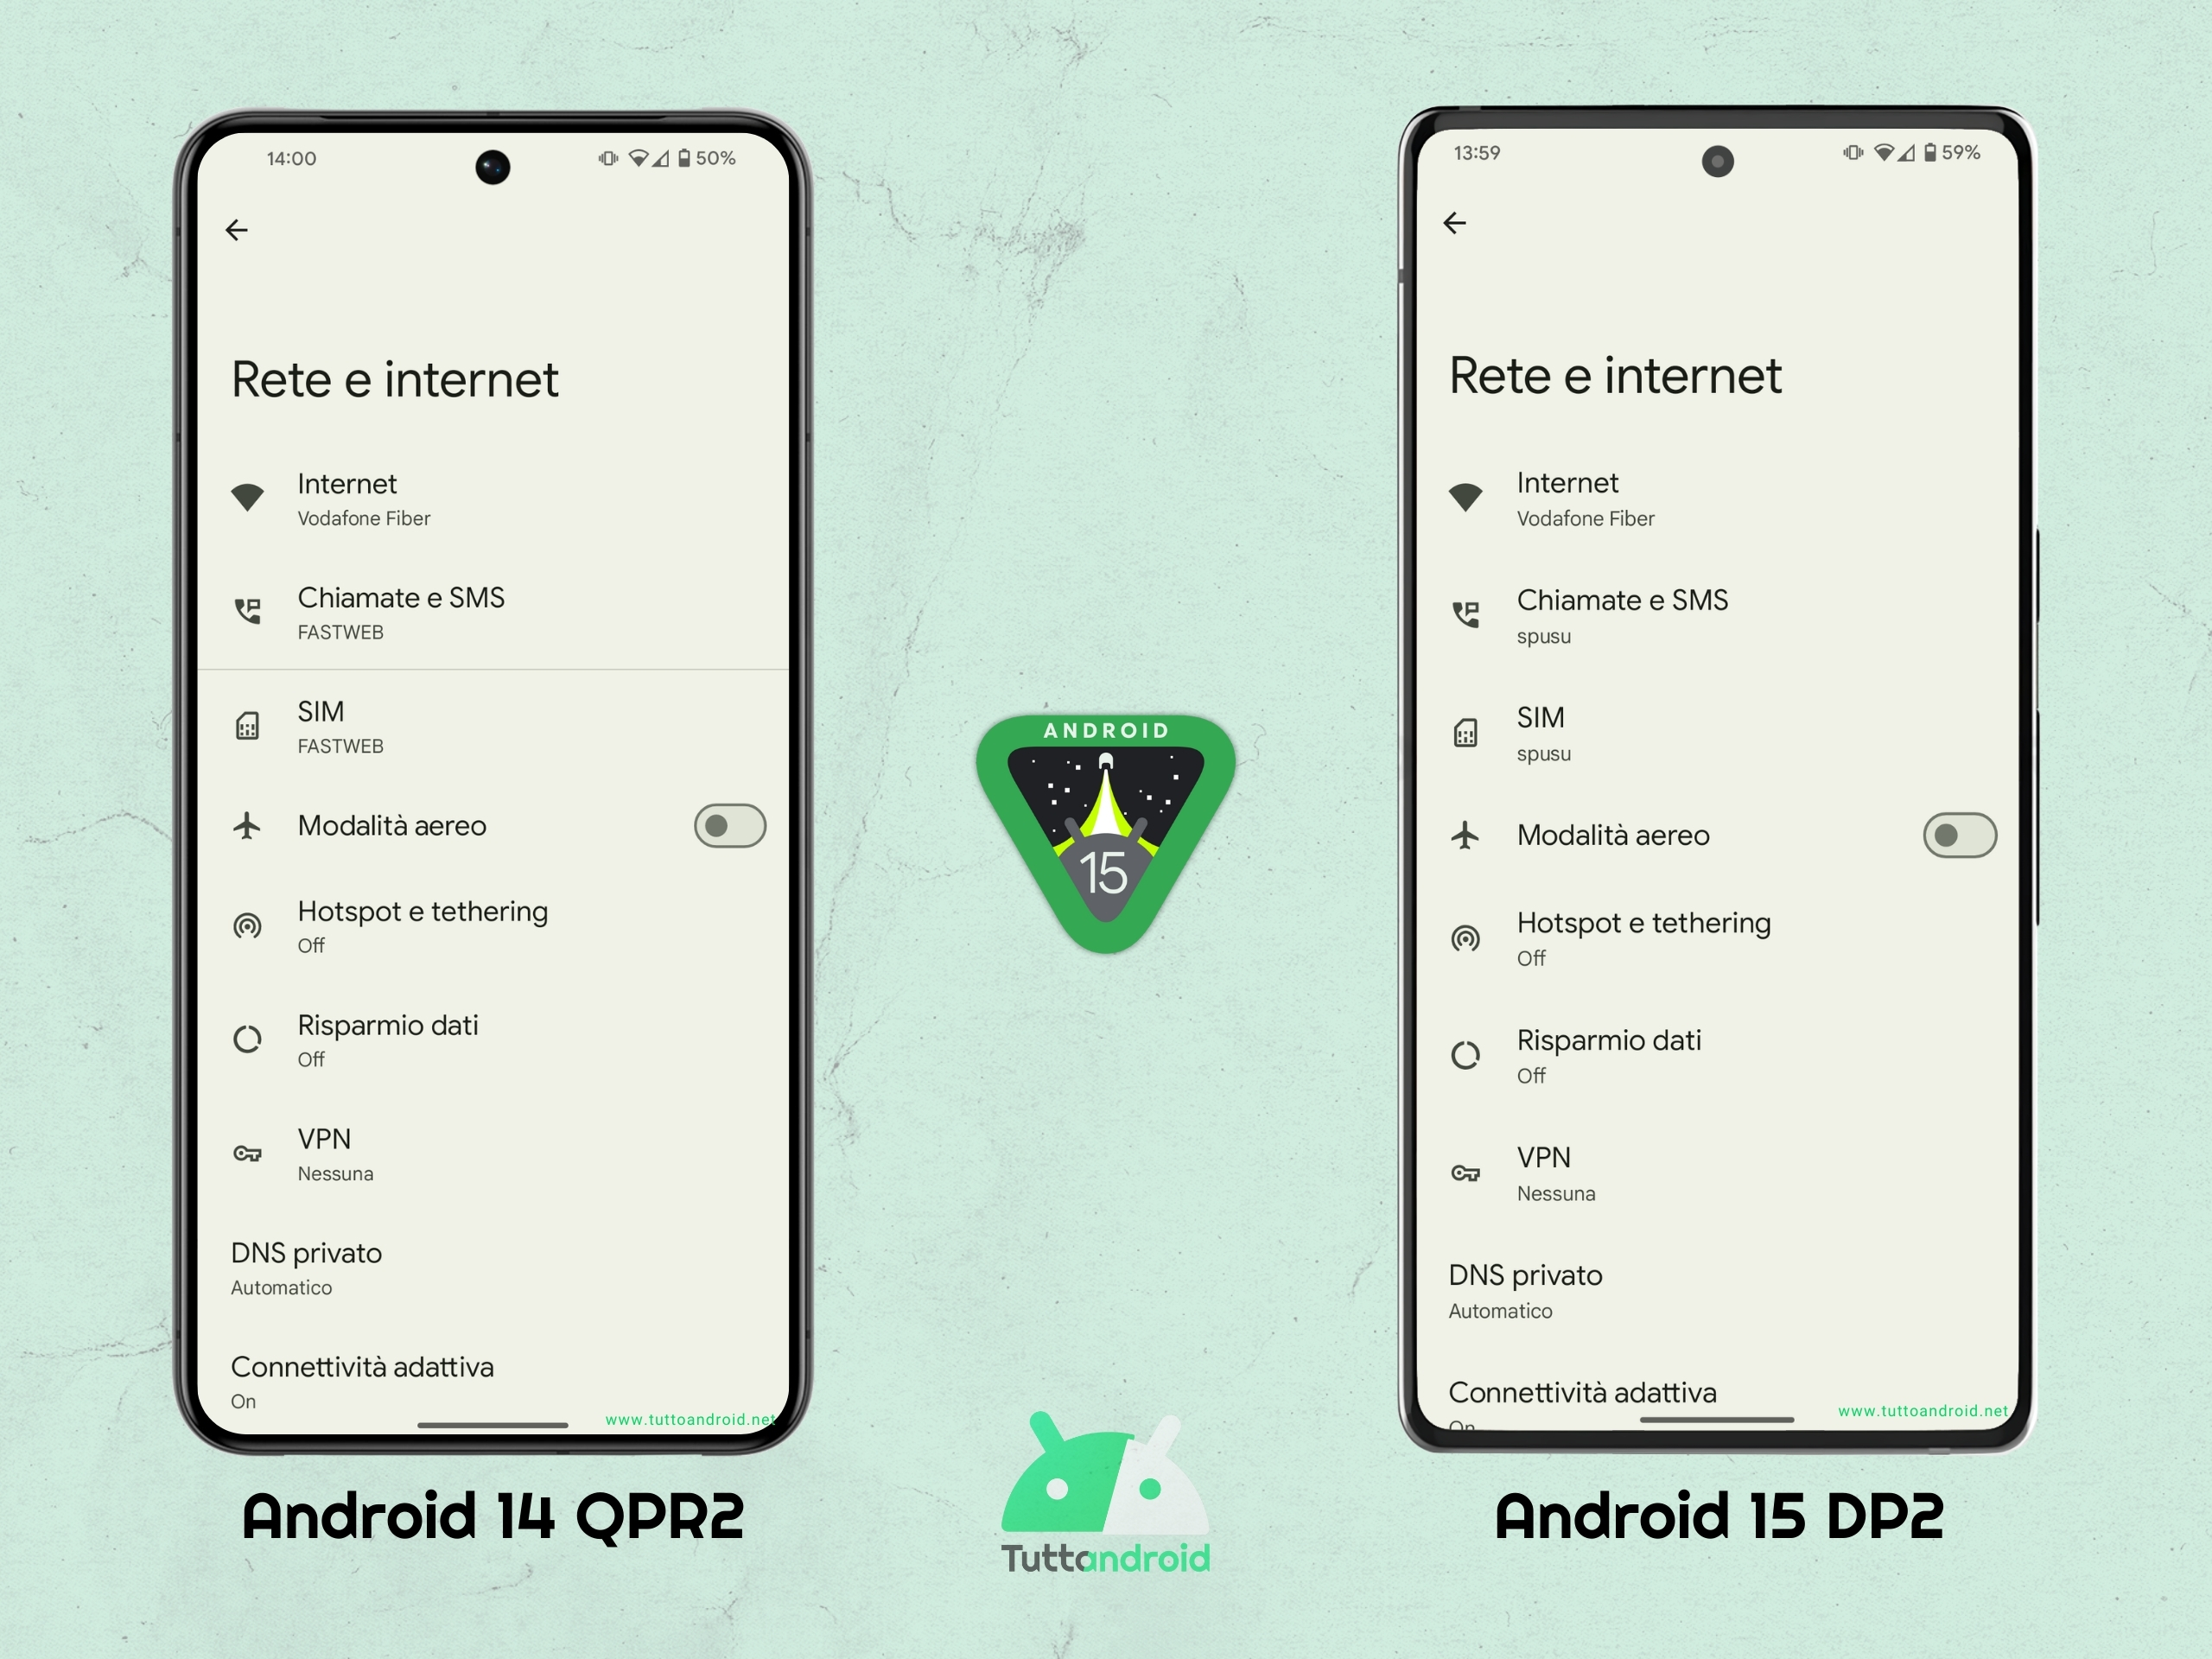 Android 15 DP2 - Rete e internet